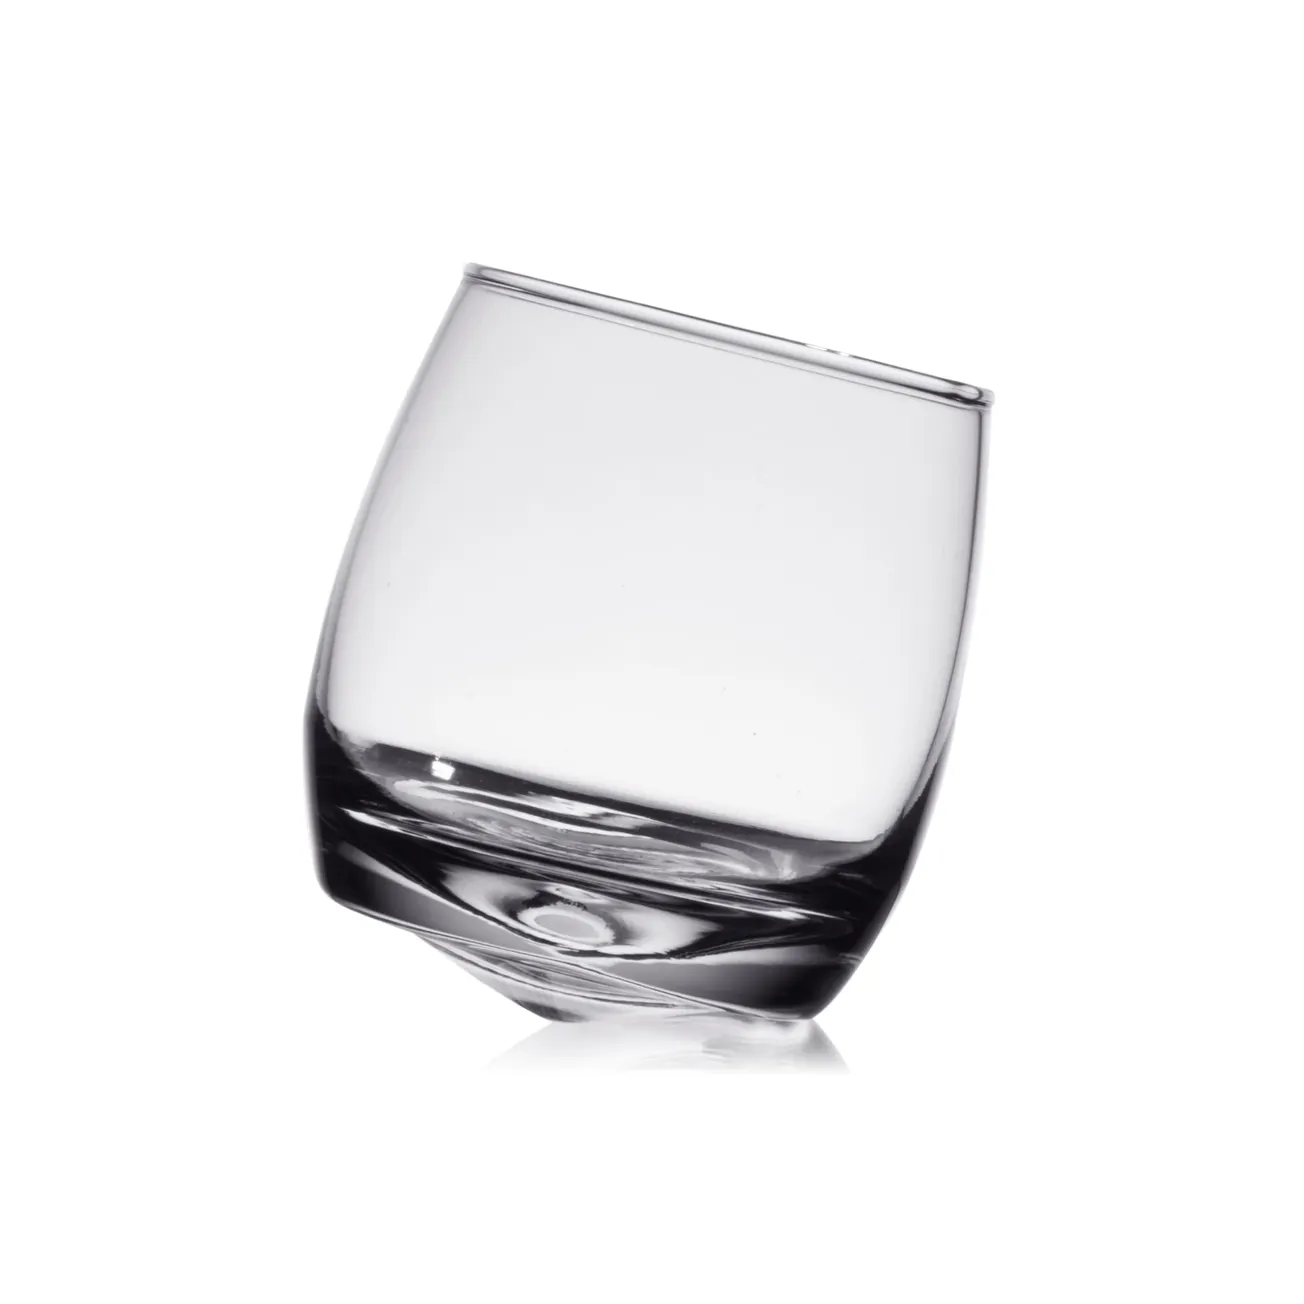 2022 Low Moq High Quality Tilting Whiskey Glasses Drinking Glasses Rock Whiskey Glasses Cup Whiskey Glass